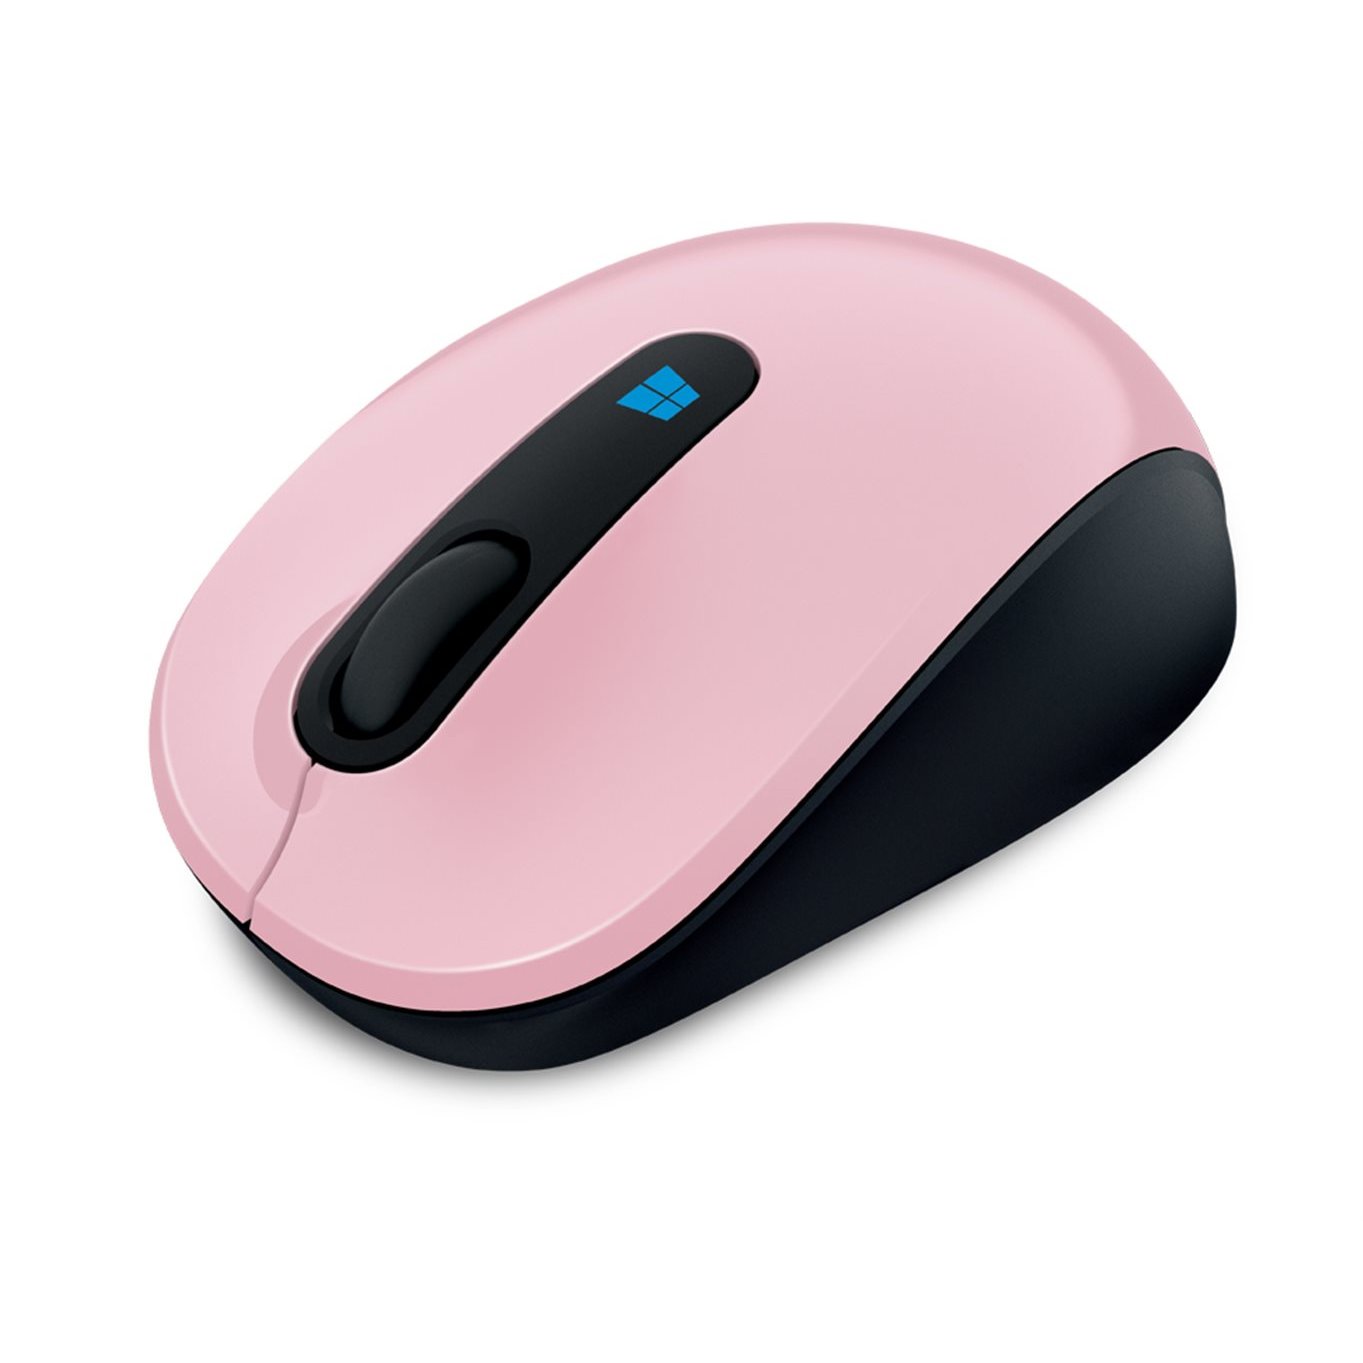 Розовая беспроводная мышь. Мышь Microsoft Sculpt mobile Mouse Pink USB. Мышь Microsoft Bluetooth розовая. Лоджитек мышка розовая. Мышка Microsoft беспроводная розовая.